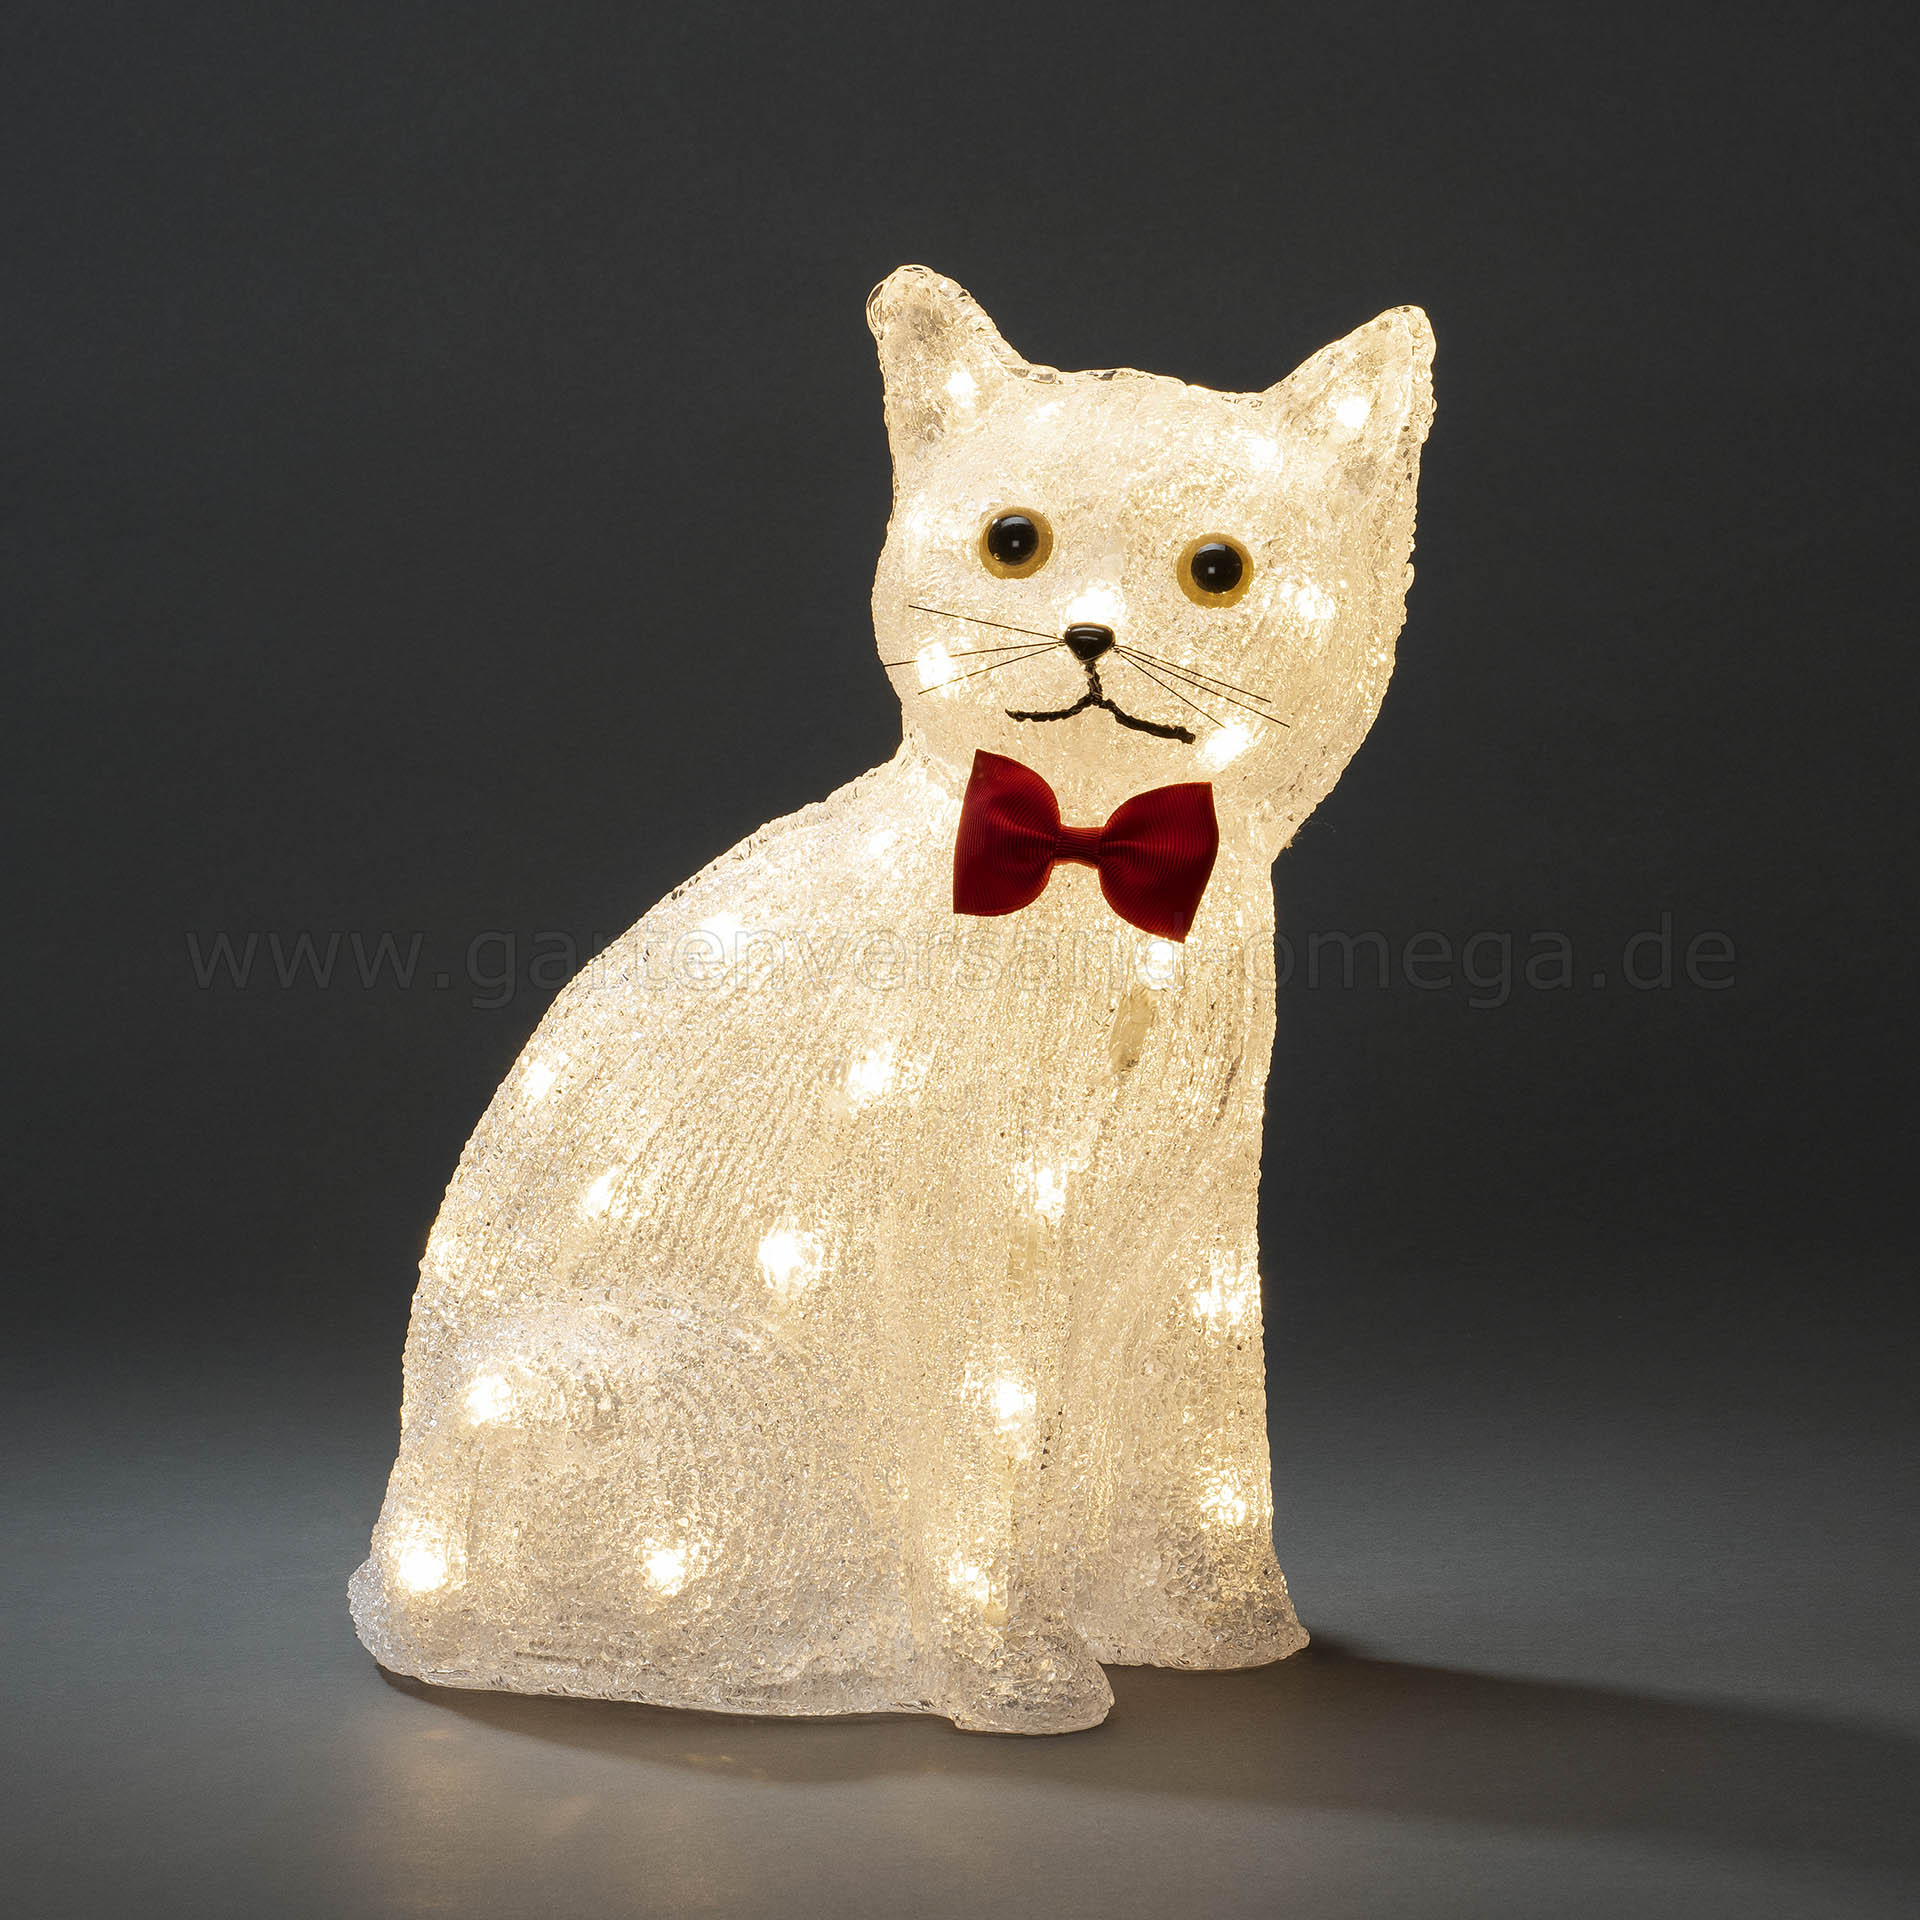 LED-Acryl Katze sitzend - Katzenfigur beleuchtet, Leuchtdekoration Katze,  LED-Katze, Weihnachtsbeleuchtung Katze, Acrylfigur Katze,  Weihnachtsdekoration Tierfiguren beleuchtet, Deko Katze beleuchtet, LED  Figuren Außen